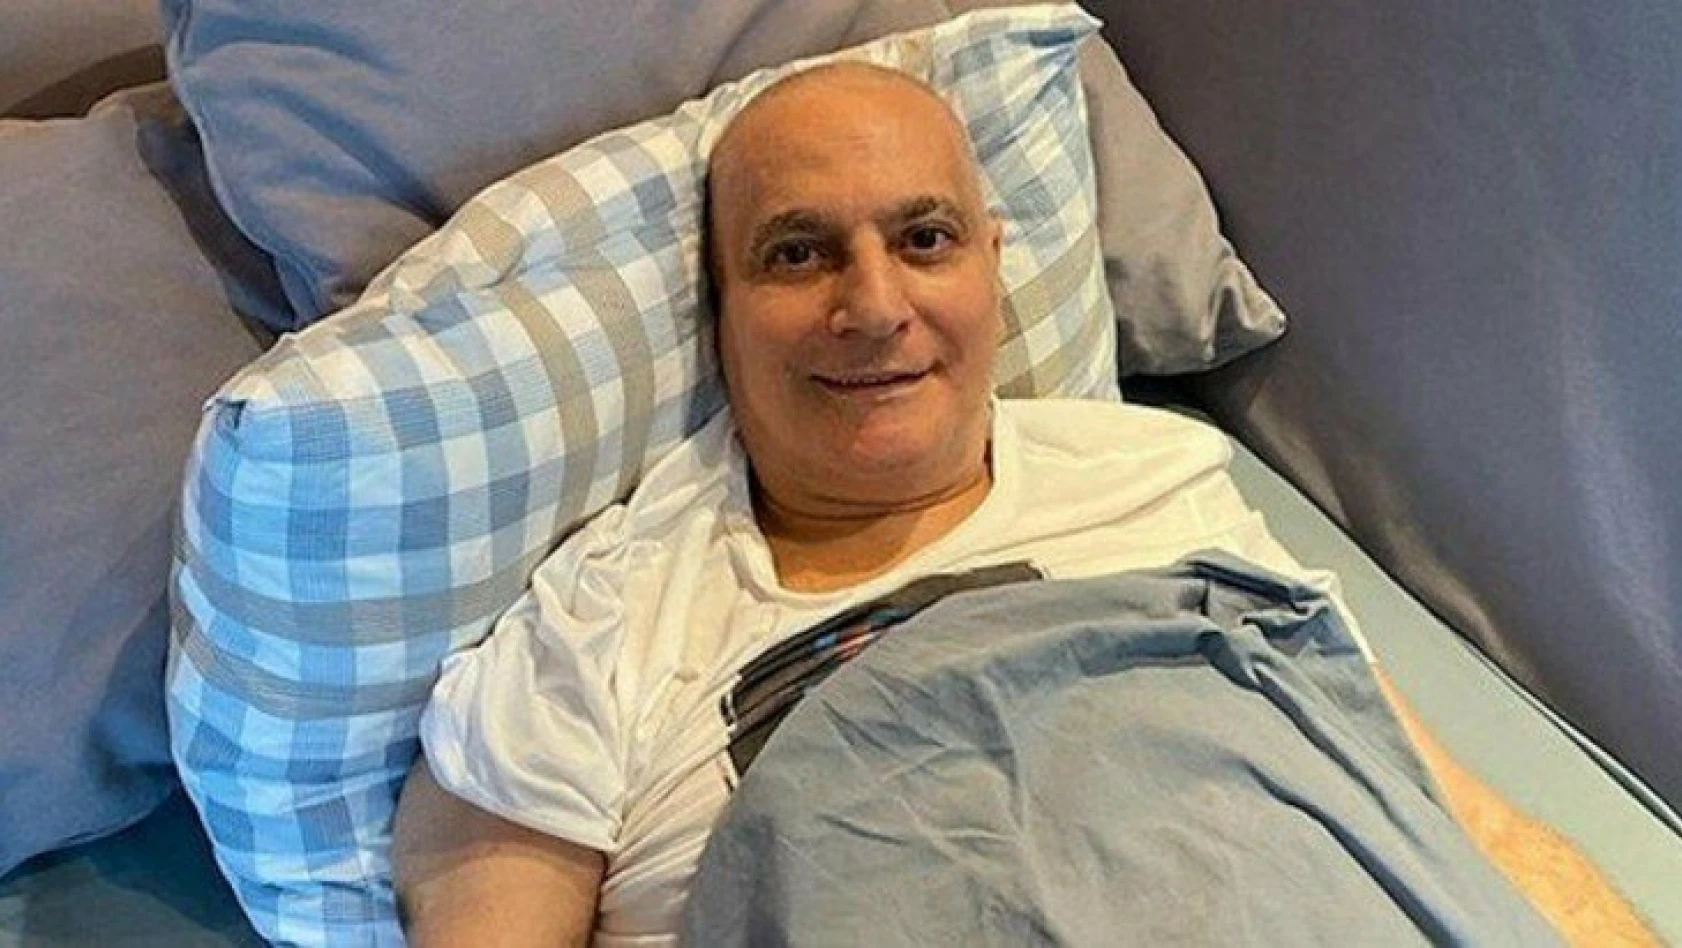 Kök hücre tedavisi uygulanan Mehmet Ali Erbil'den haber var